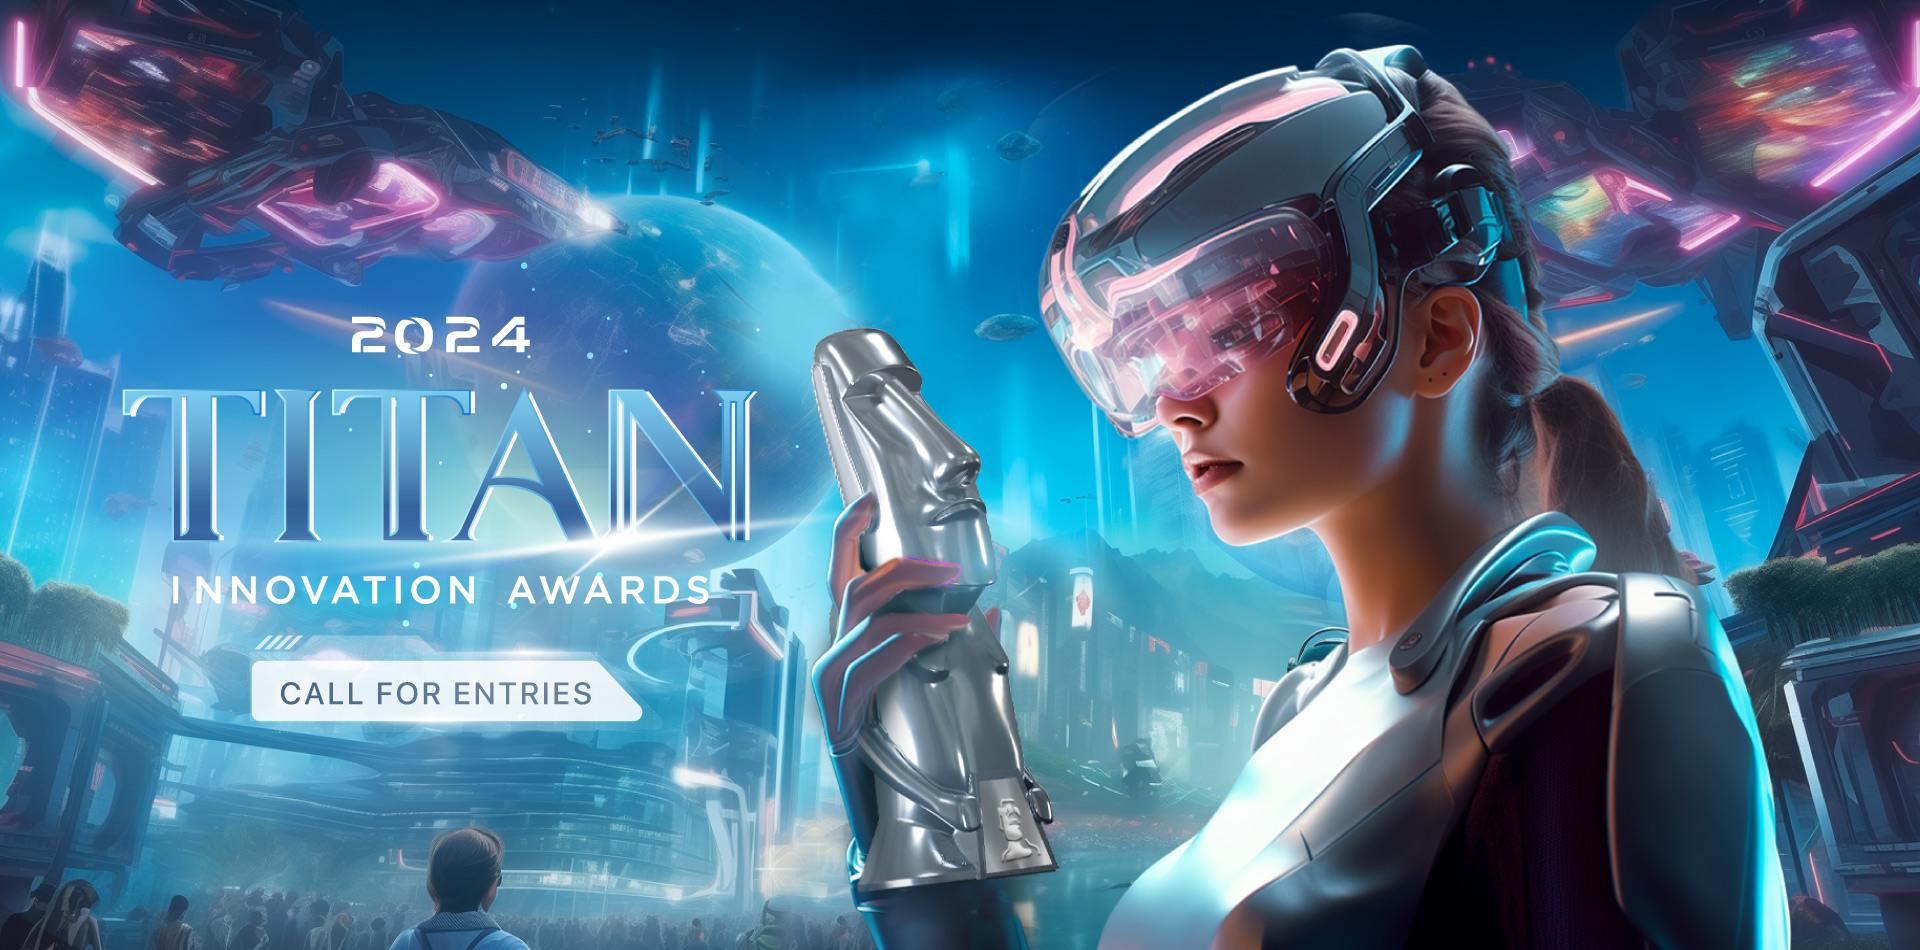 TITAN Innovation Awards 2024 Call For Entries